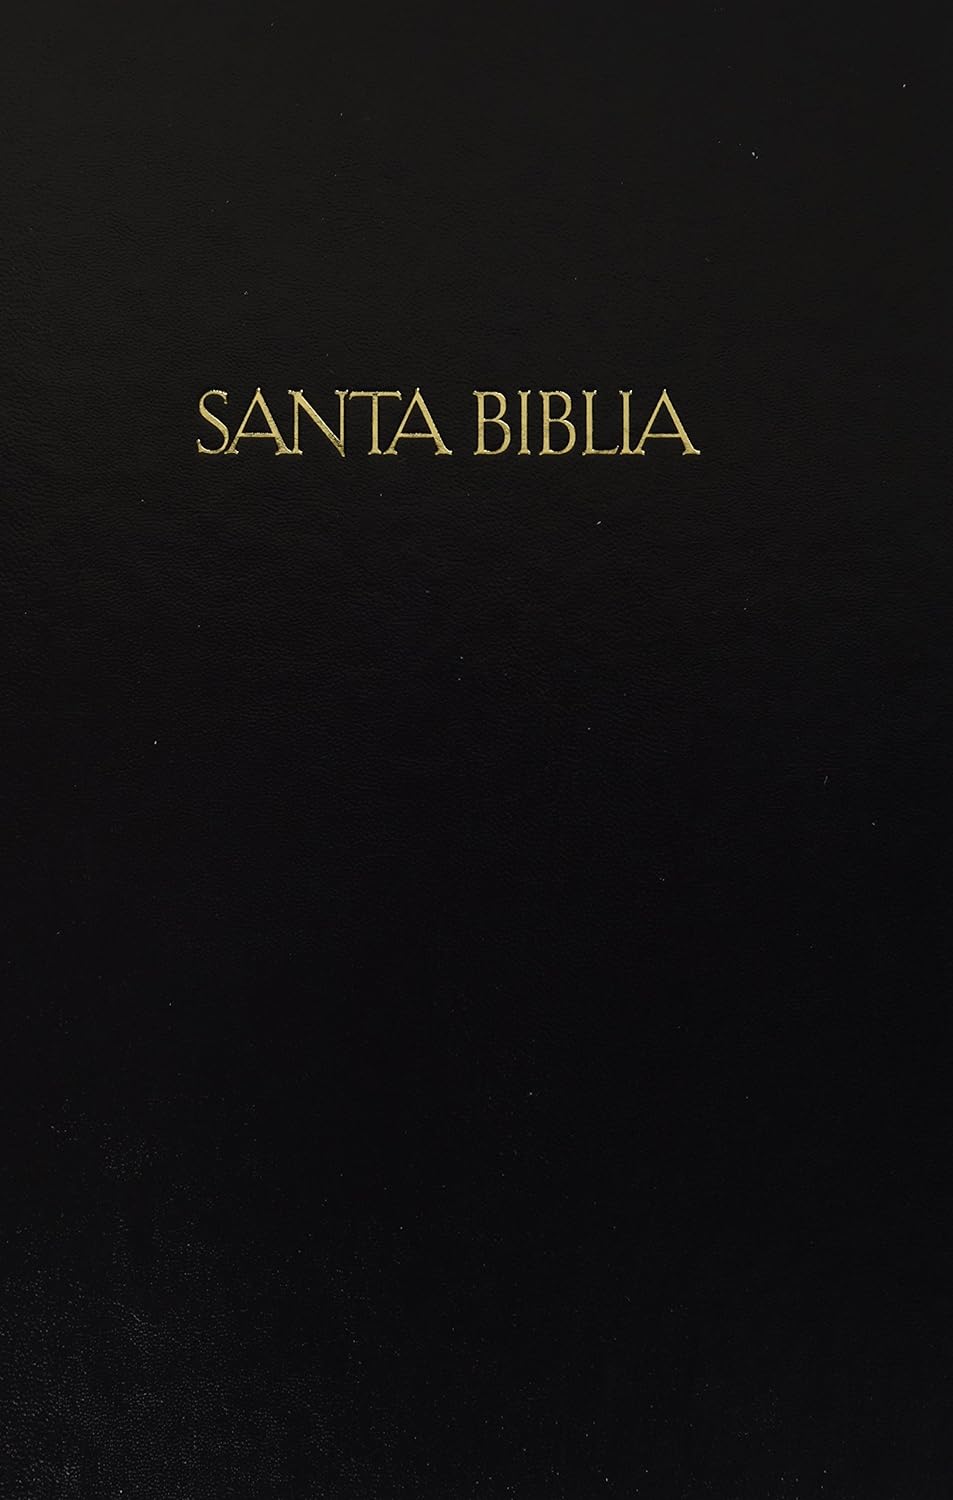 Espagnol-Anglais, Bible bilingue, Reina Valera 1960 - King James Version, gros caractères, rigide...